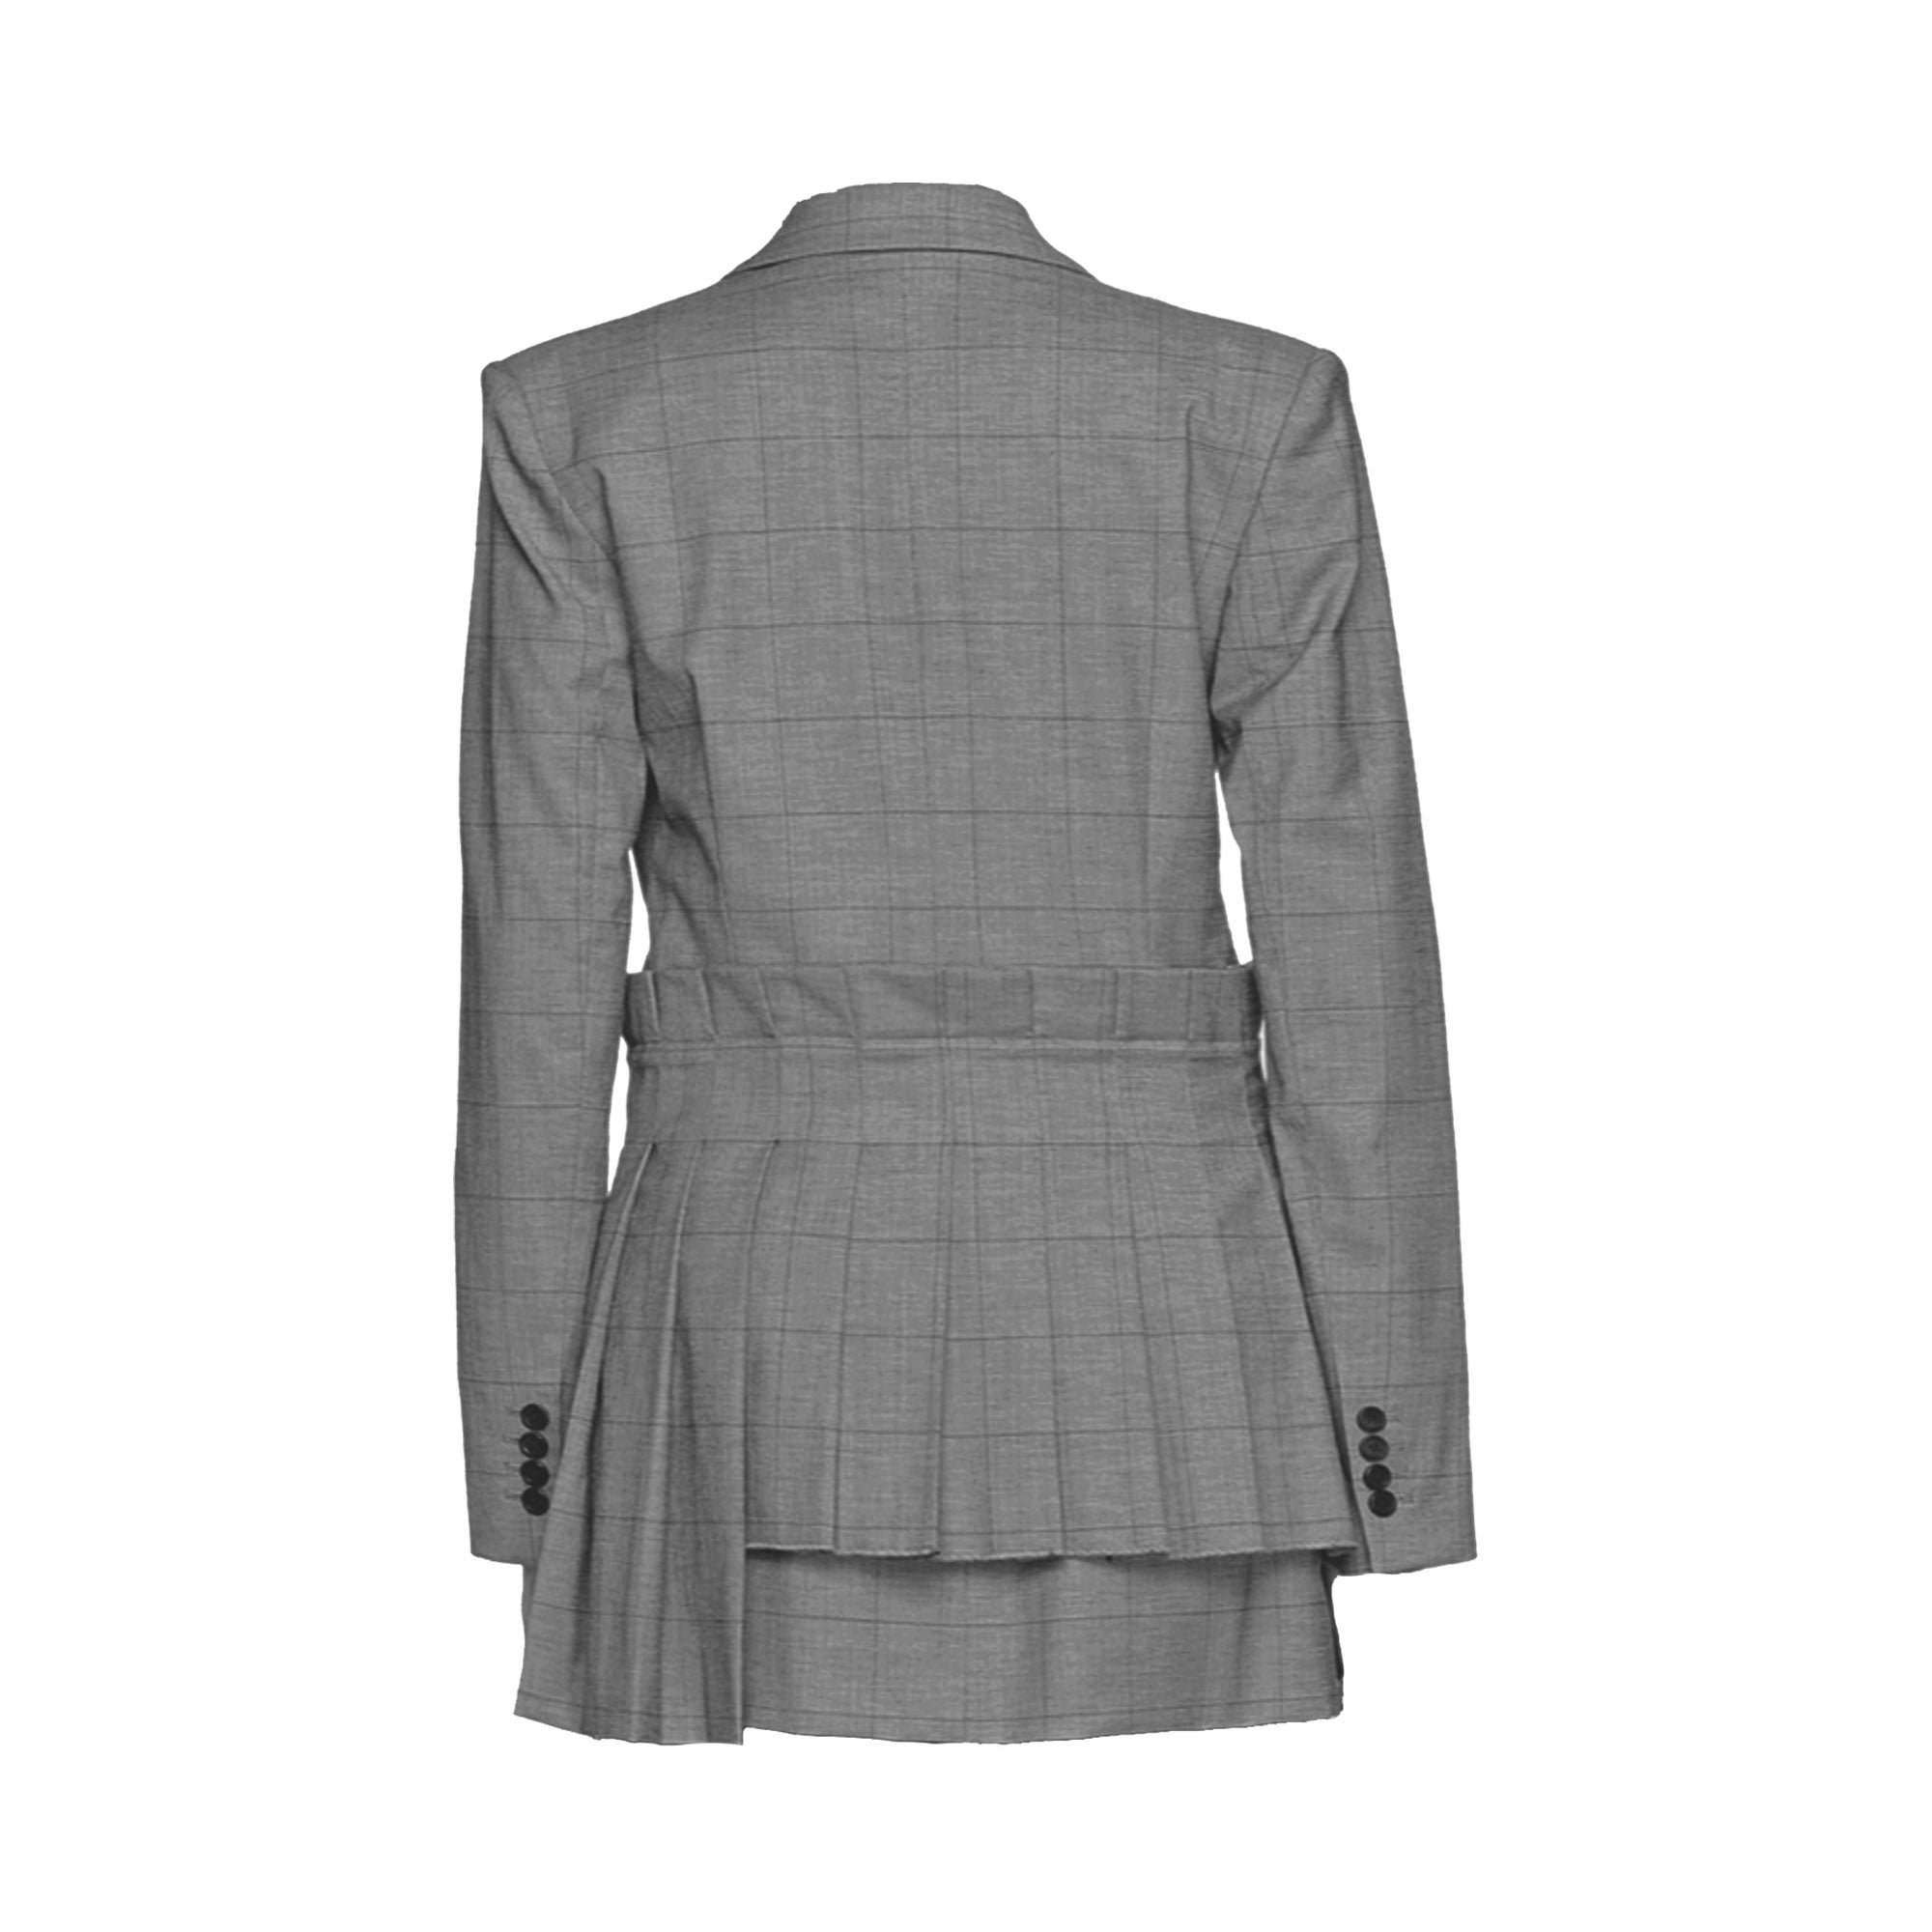 Monse Pleated Jacket/Dress